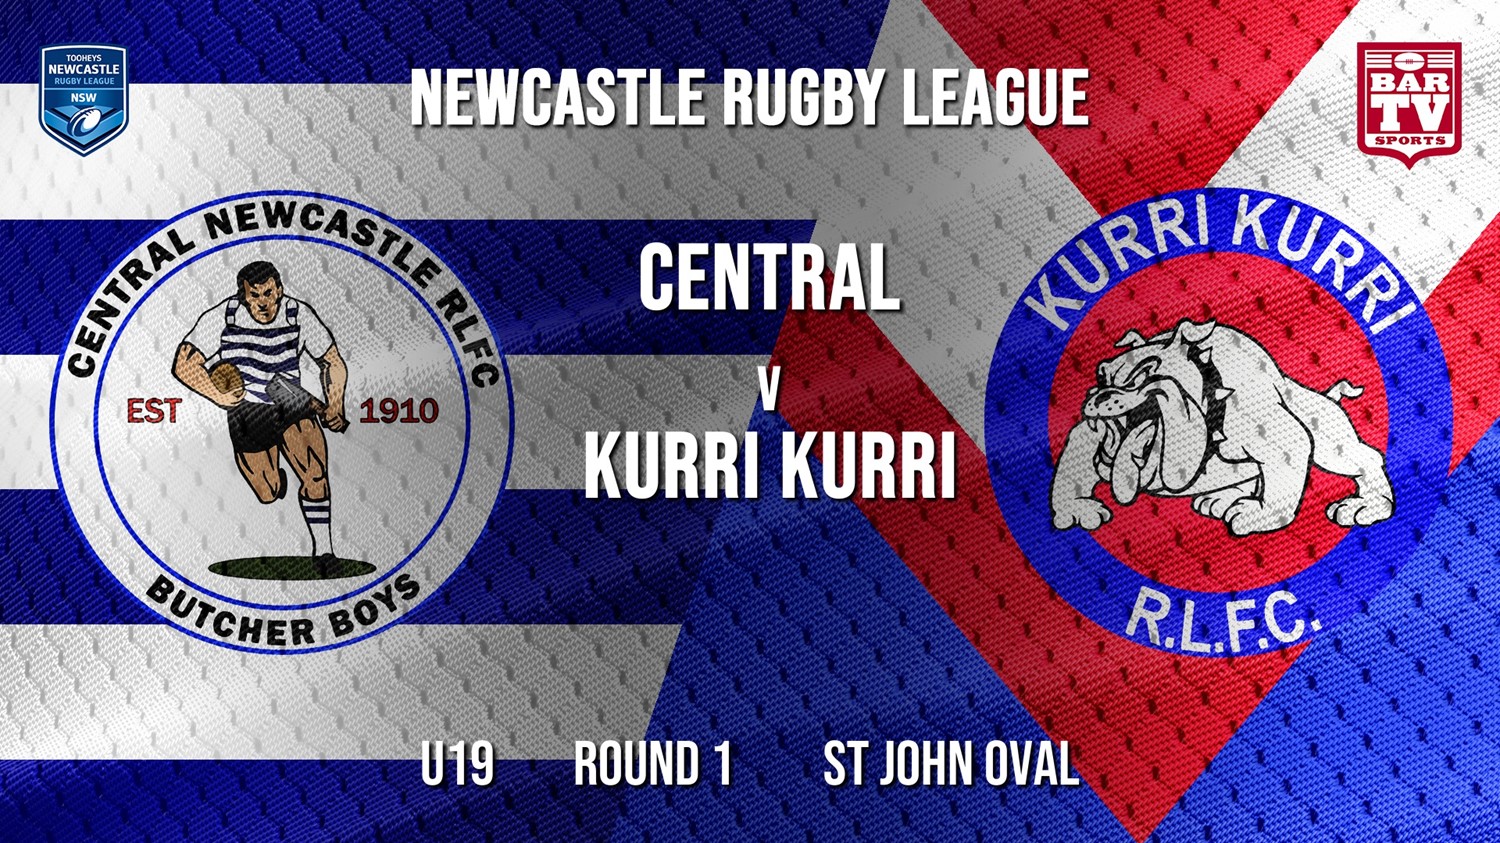 Newcastle Rugby League Round 1  - U19 - Central Newcastle v Kurri Kurri Bulldogs Minigame Slate Image